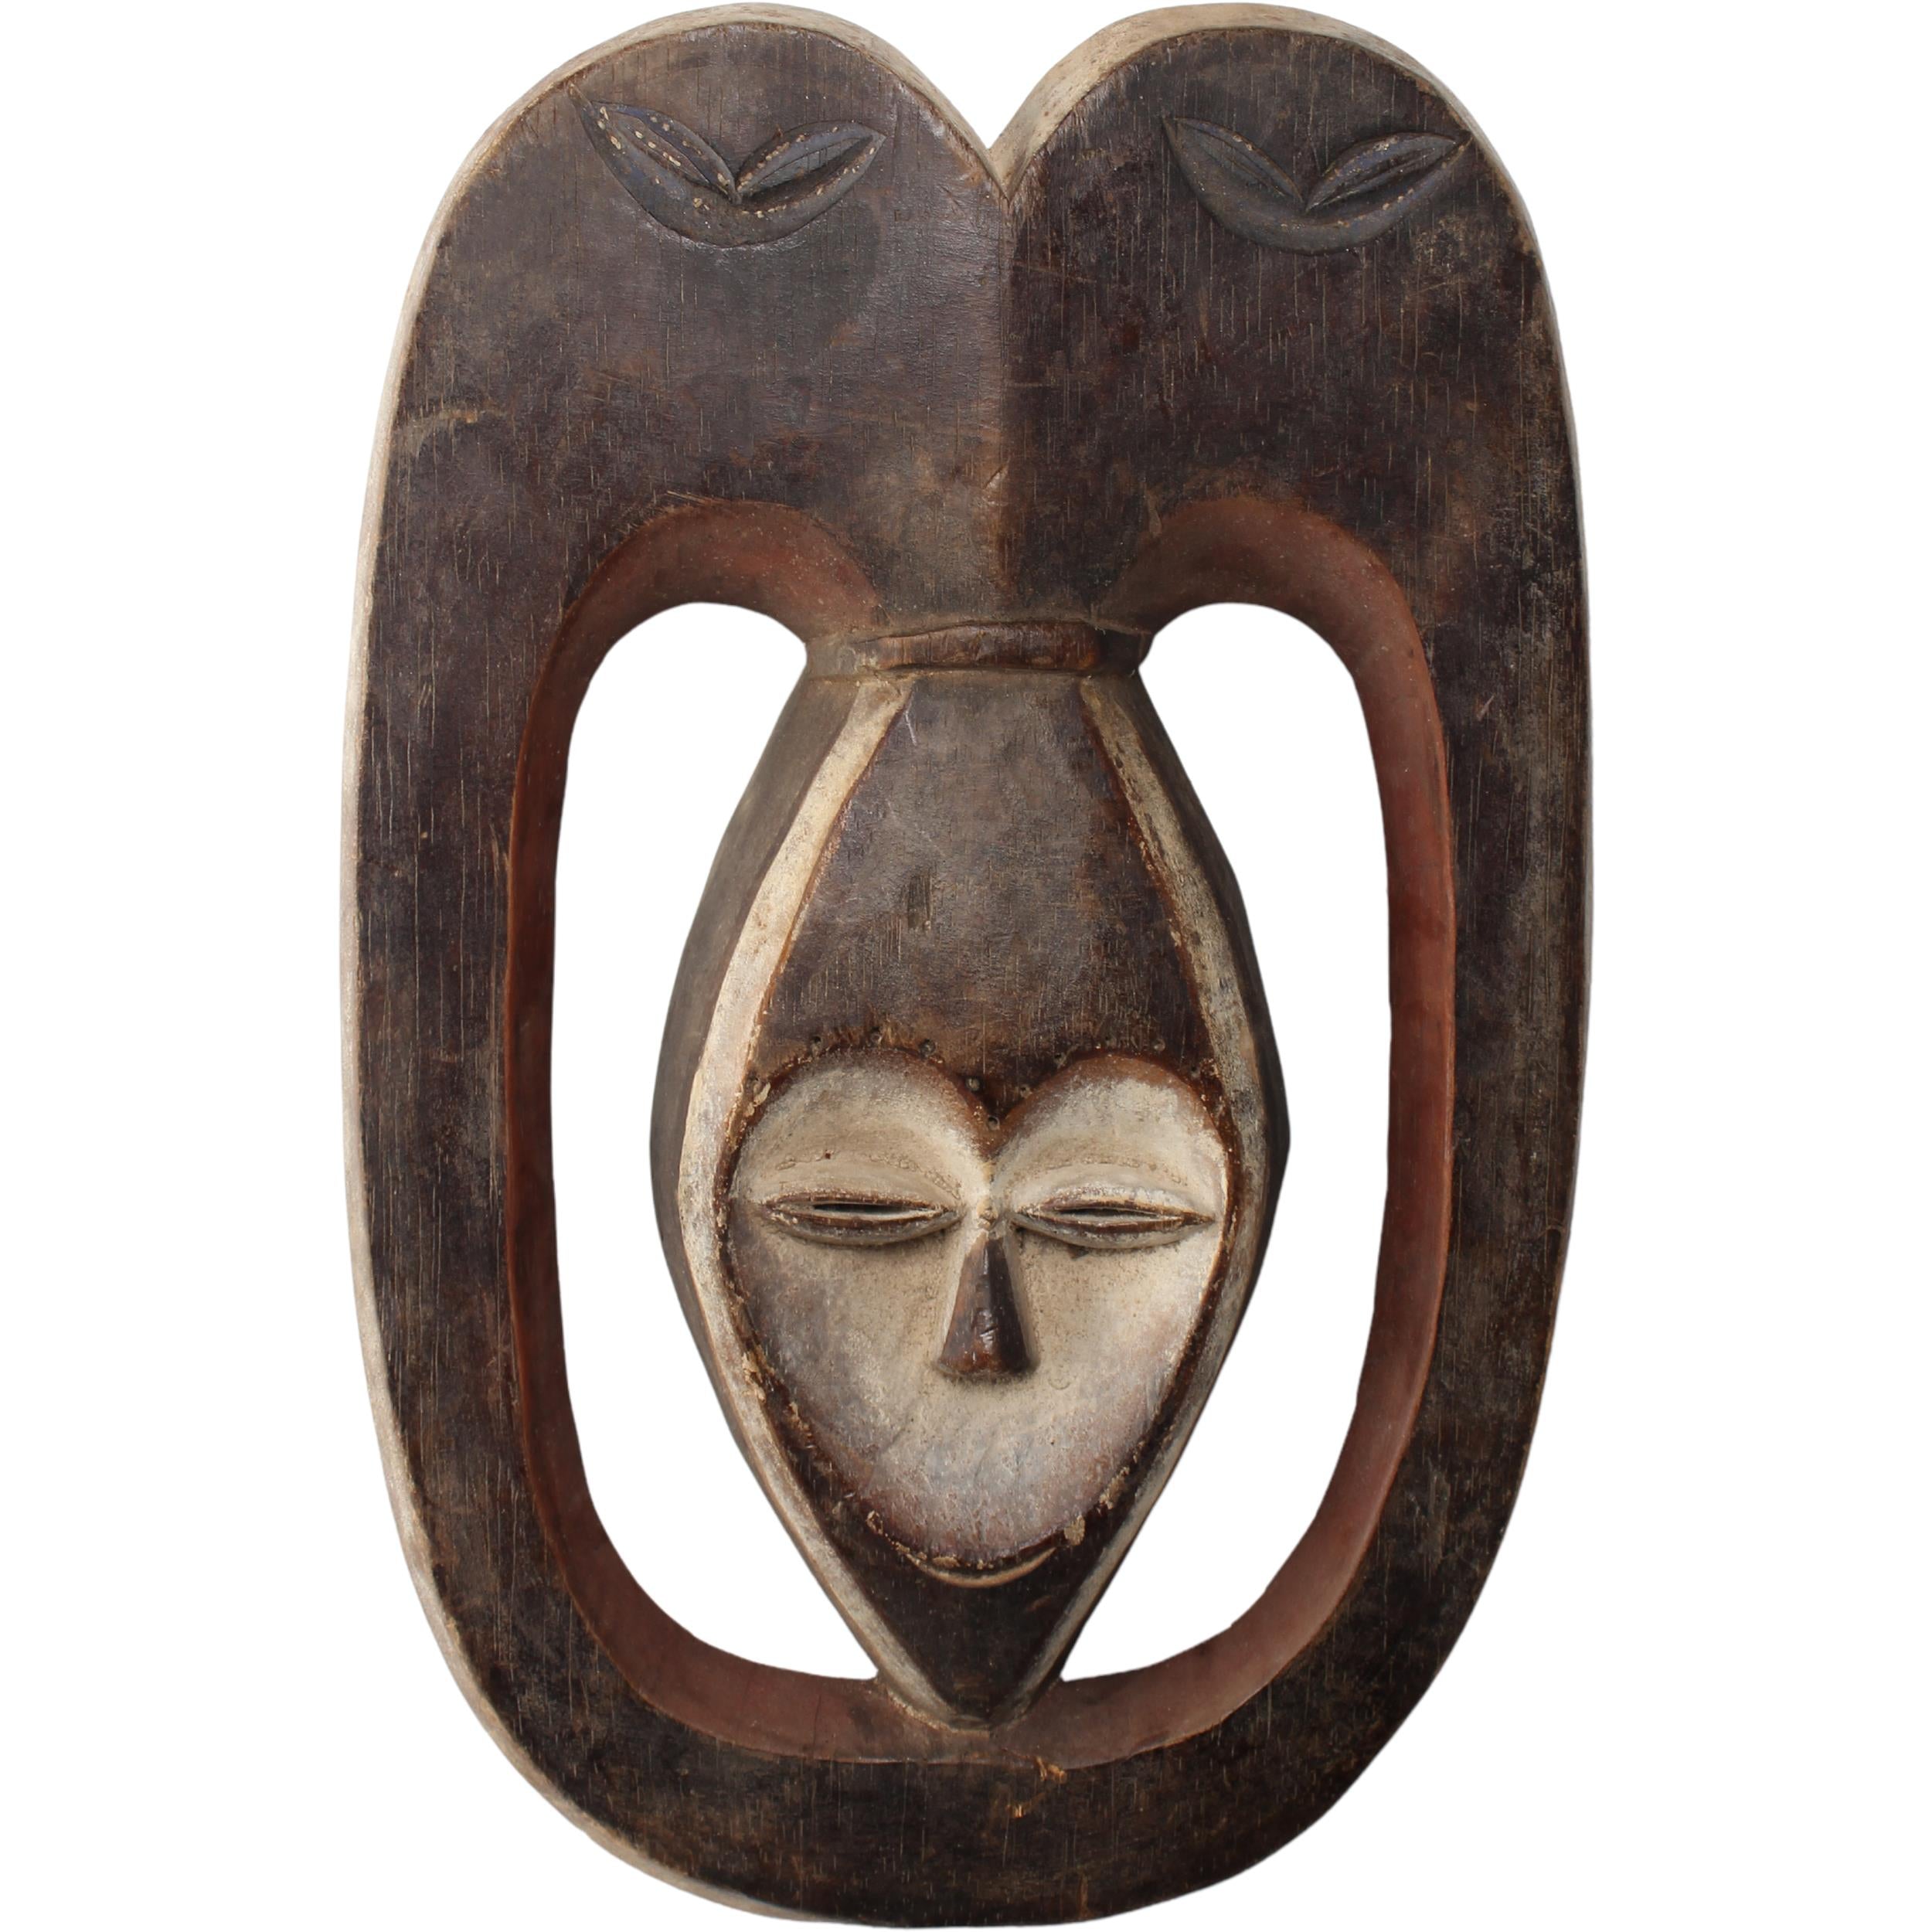 Kwele Tribe Mask ~16.9" Tall